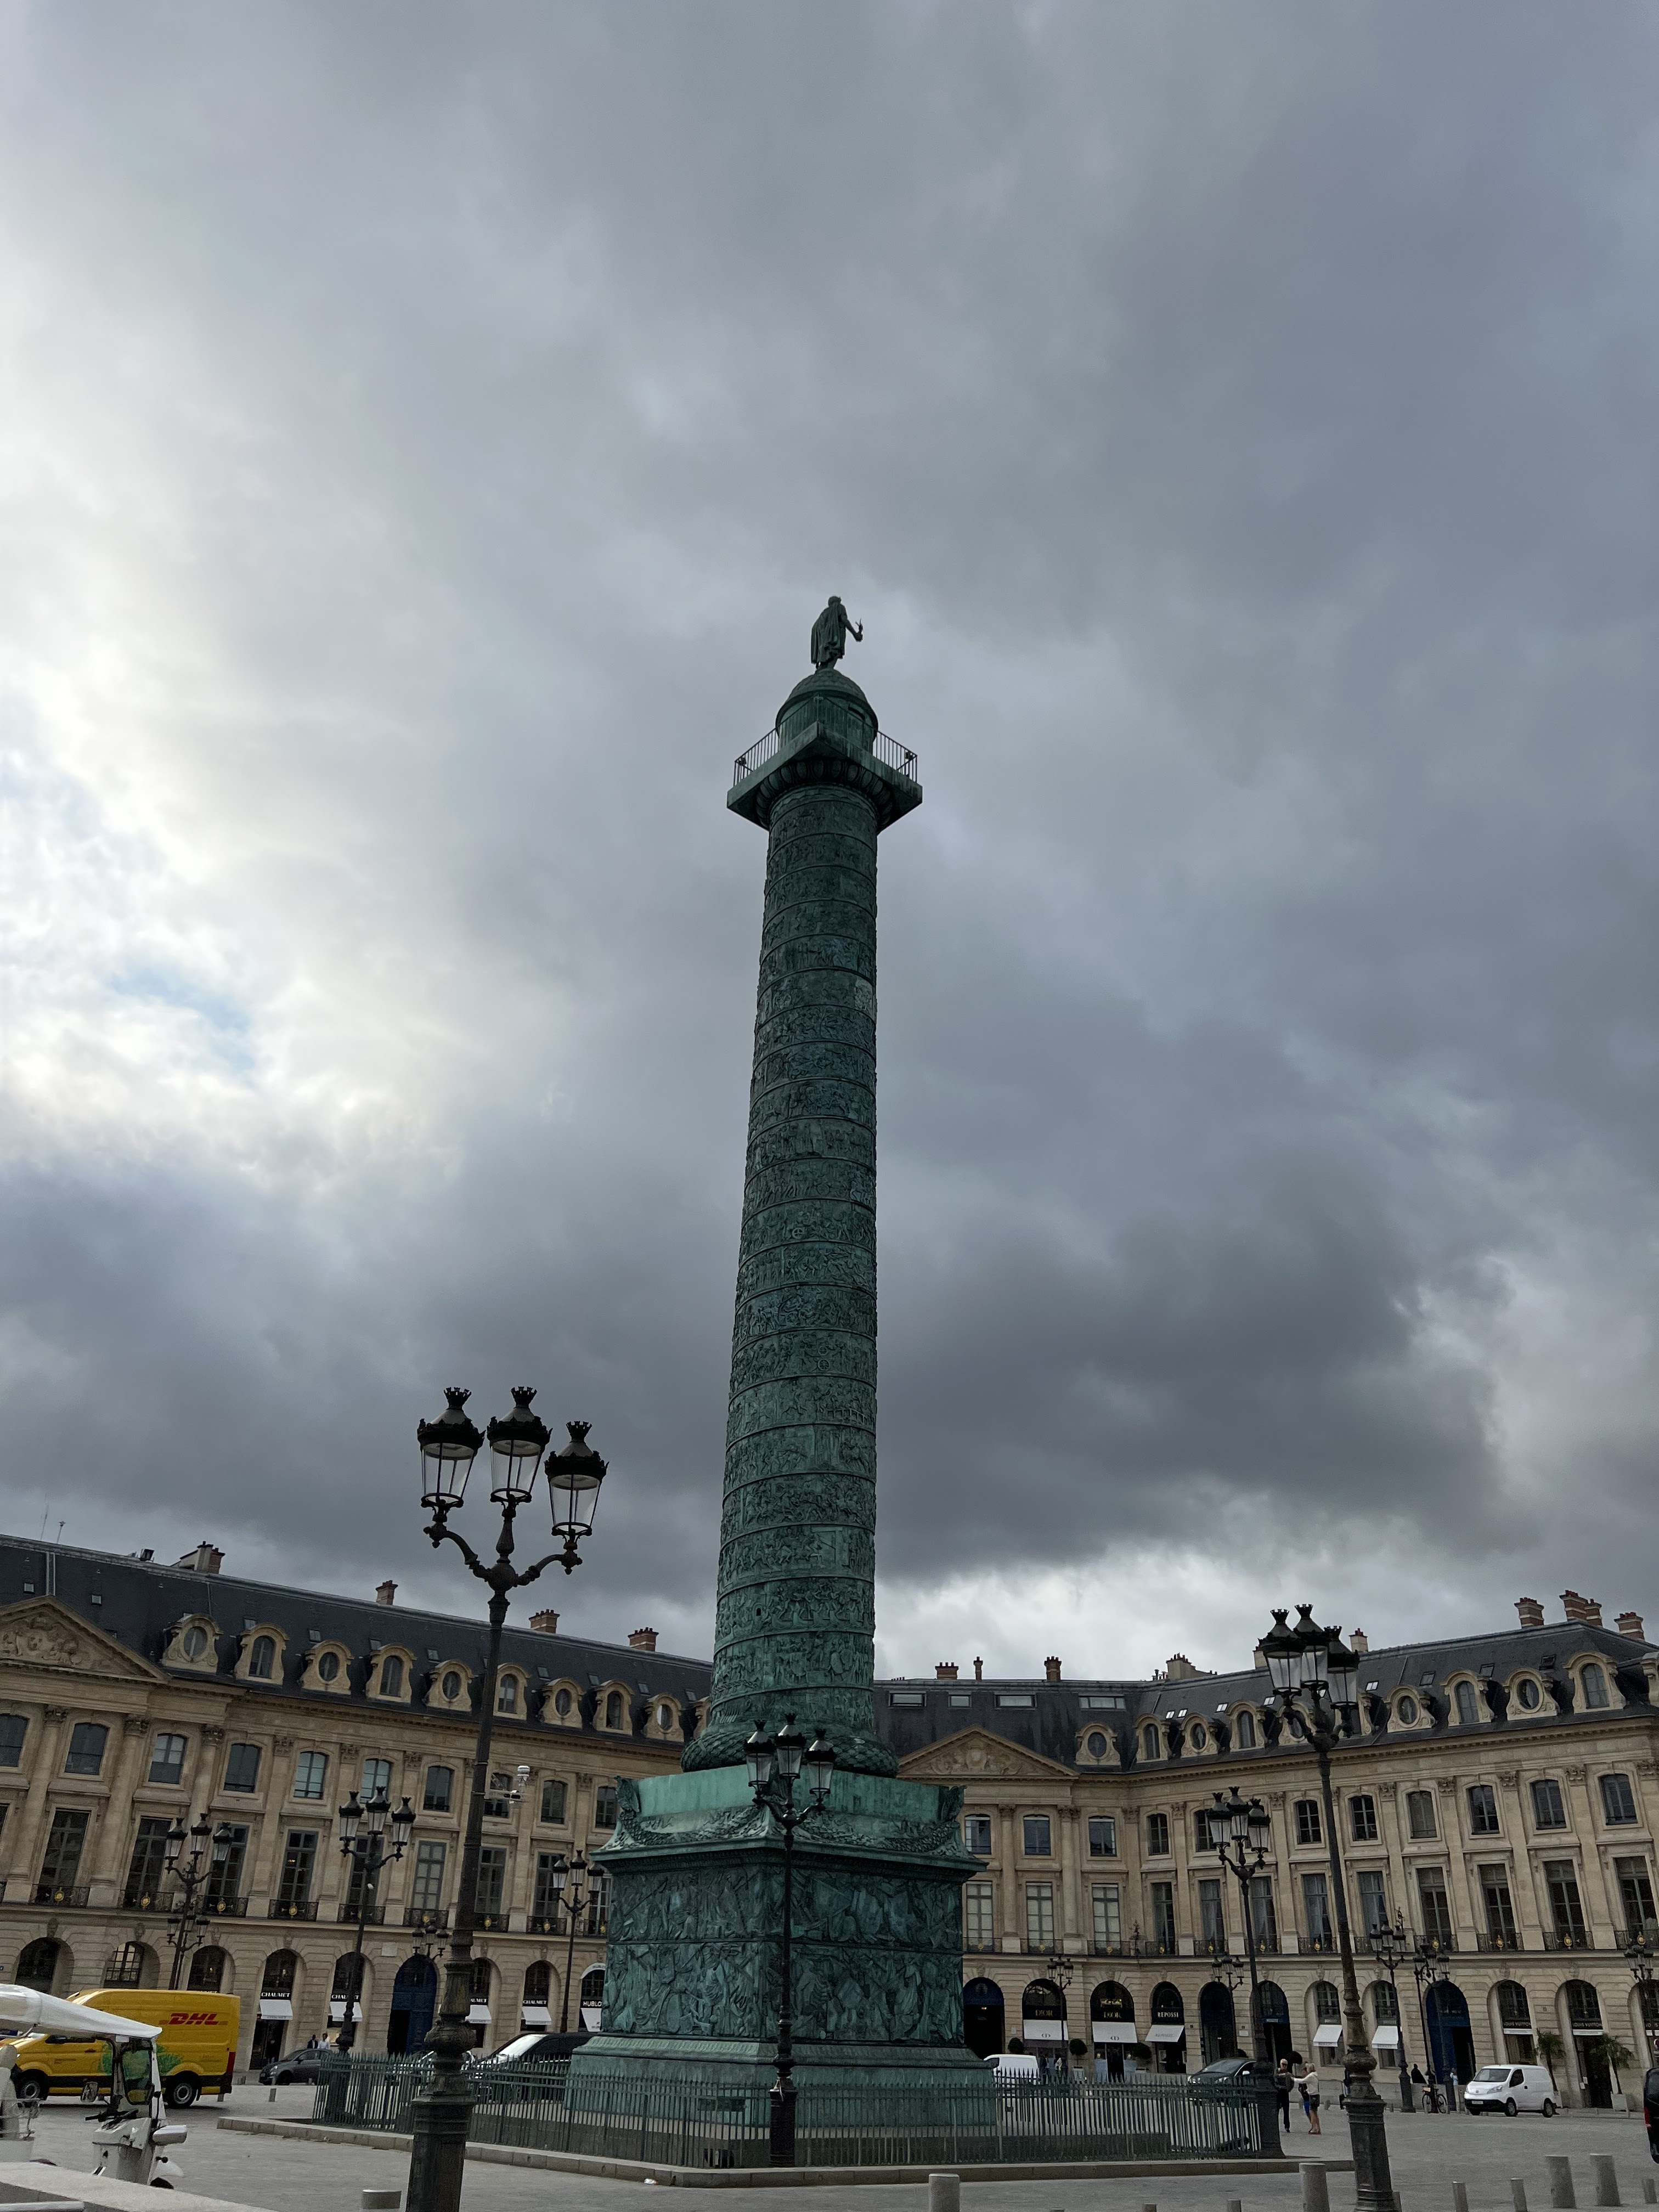 paris travel guide, free things to do in paris, paris monuments